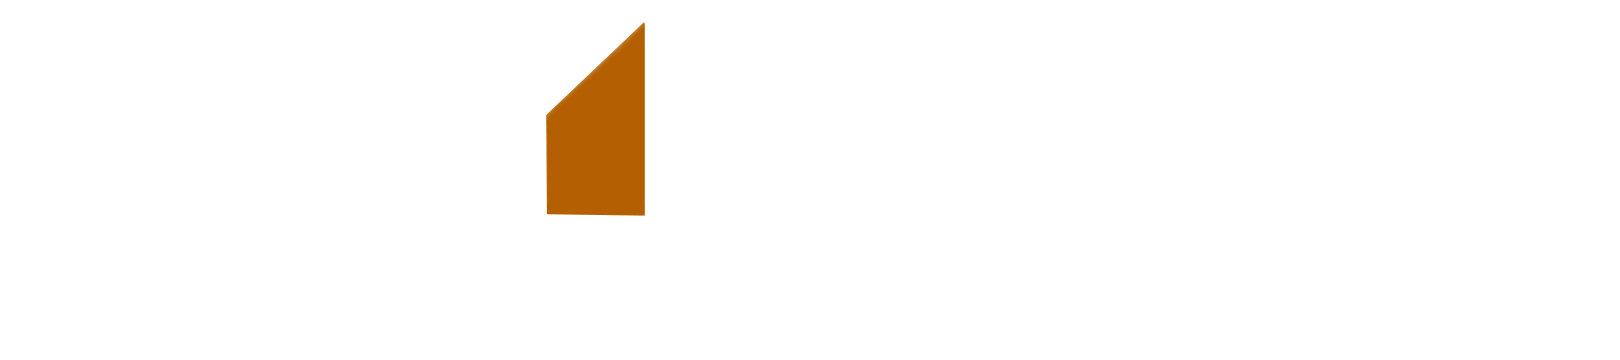 LND Legal